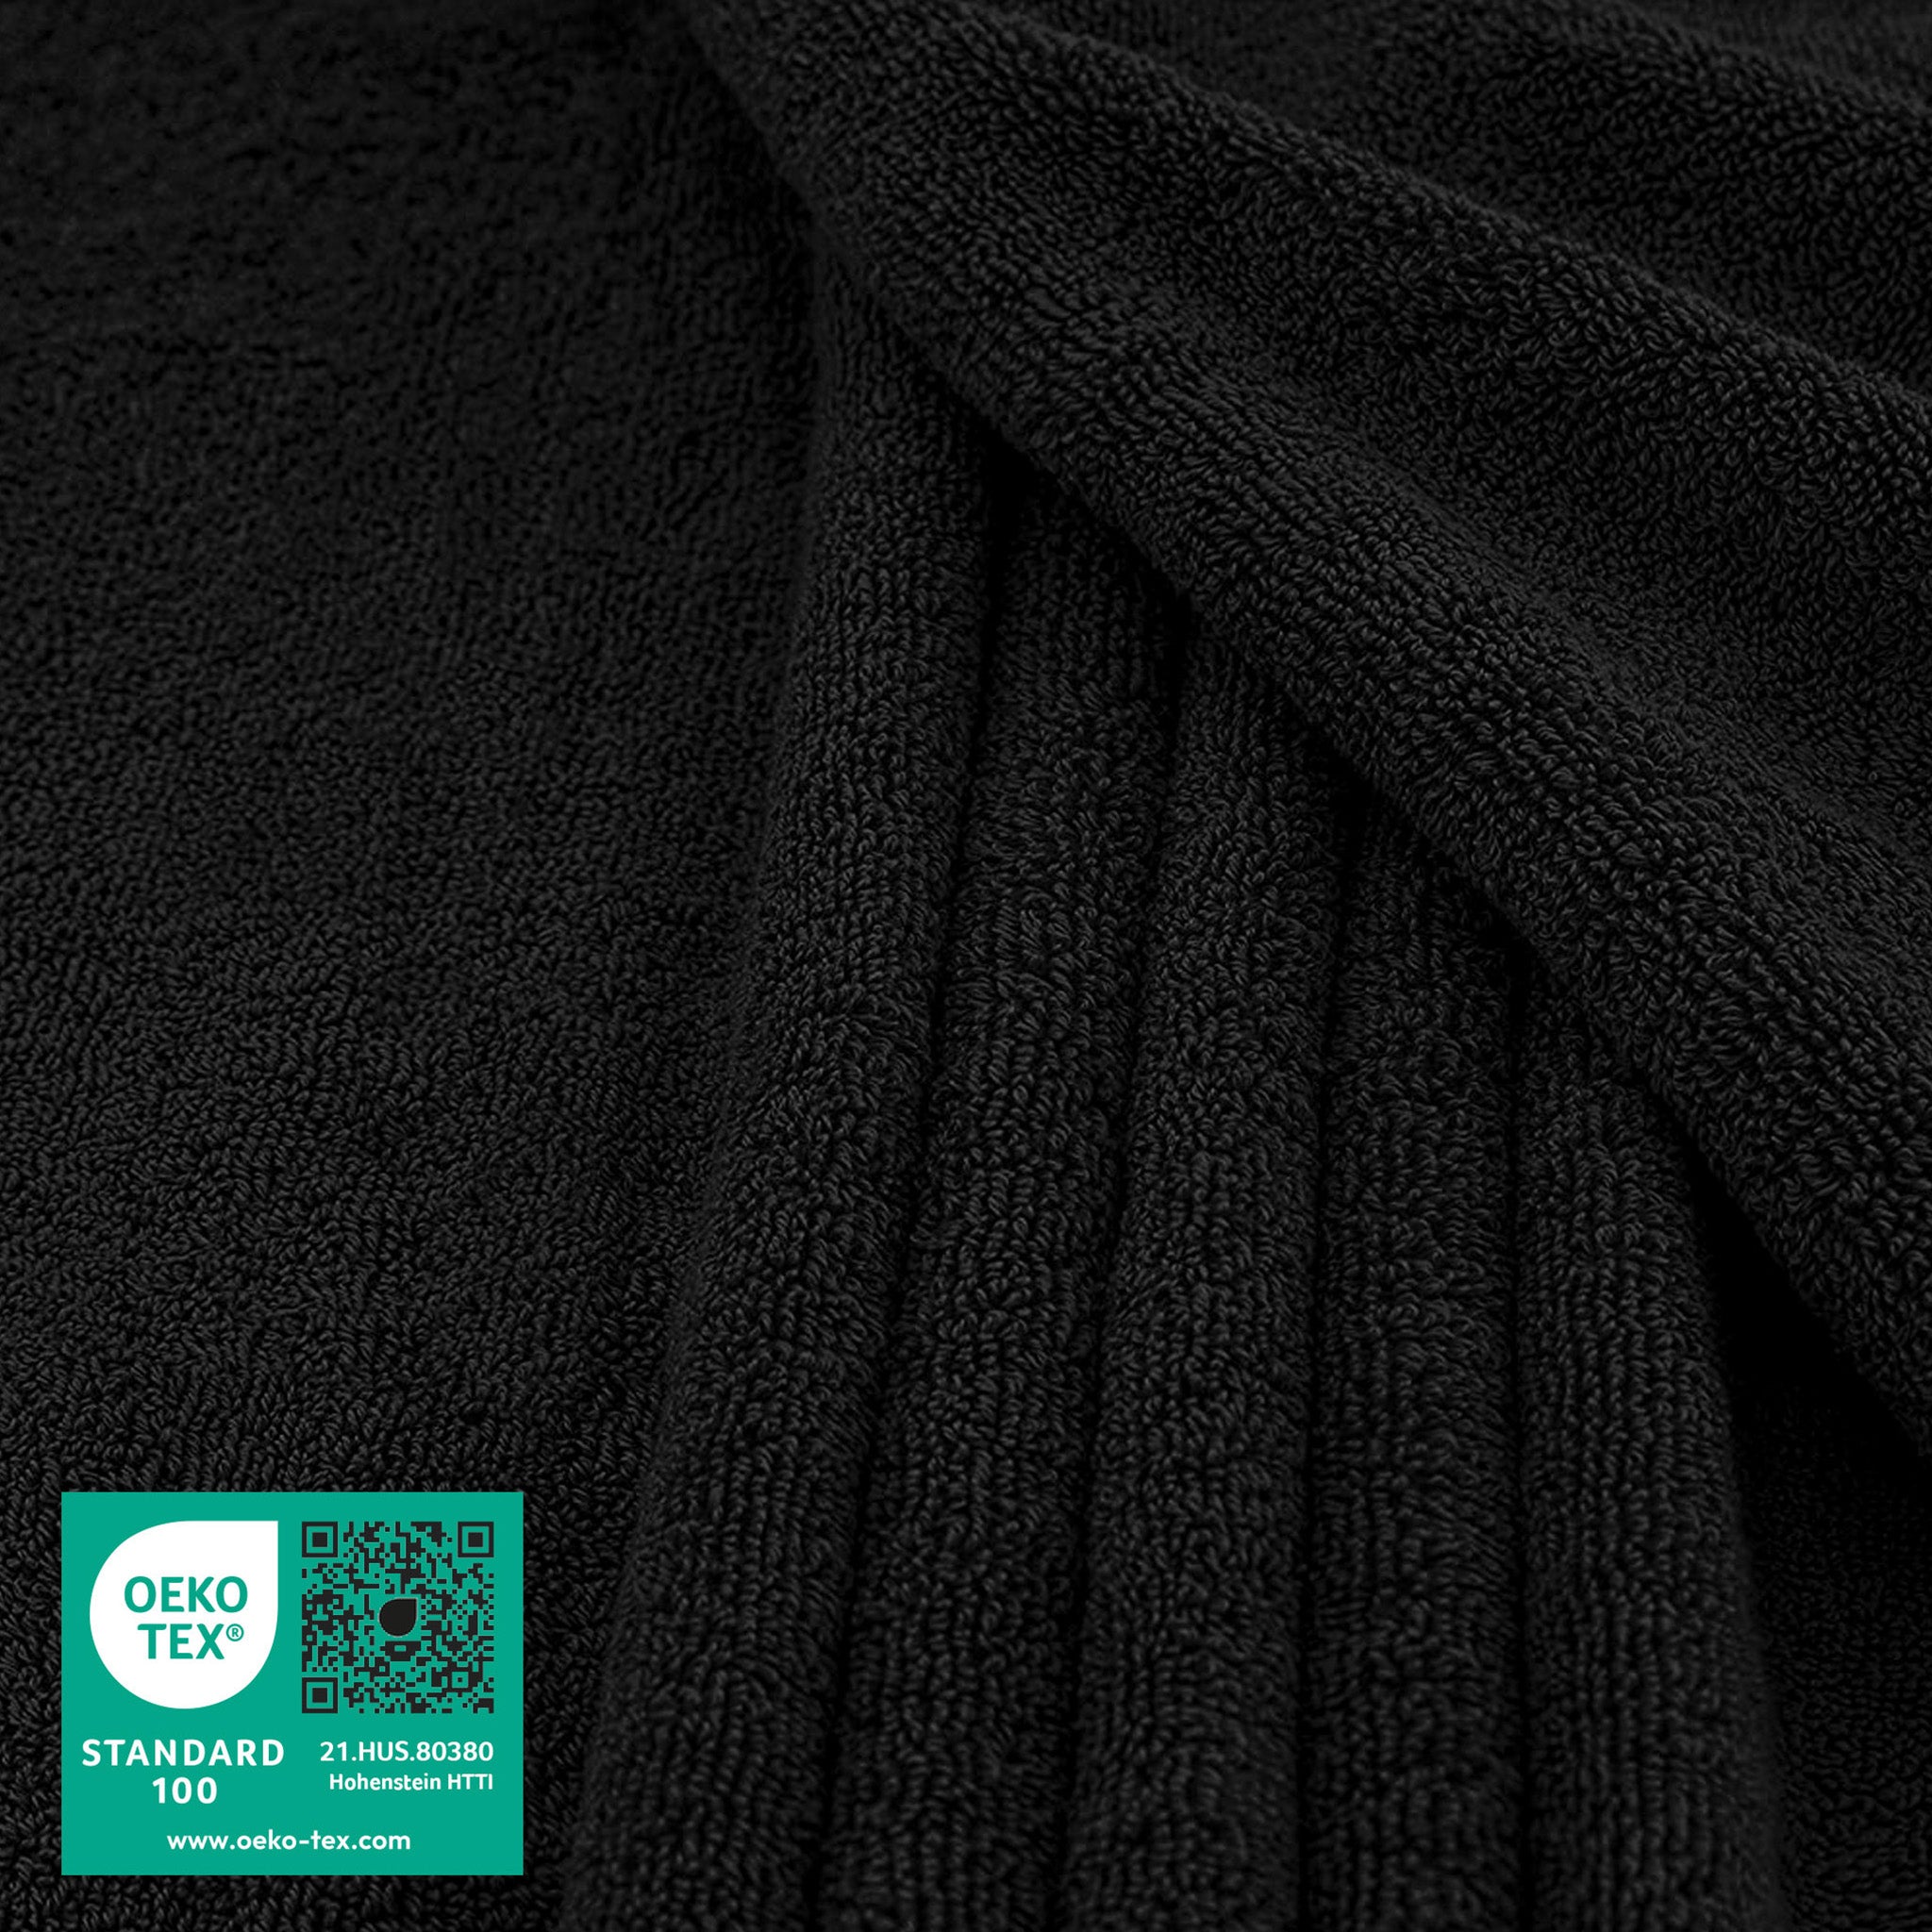 American Soft Linen 100% Ring Spun Cotton 40x80 Inches Oversized Bath Sheets black-2